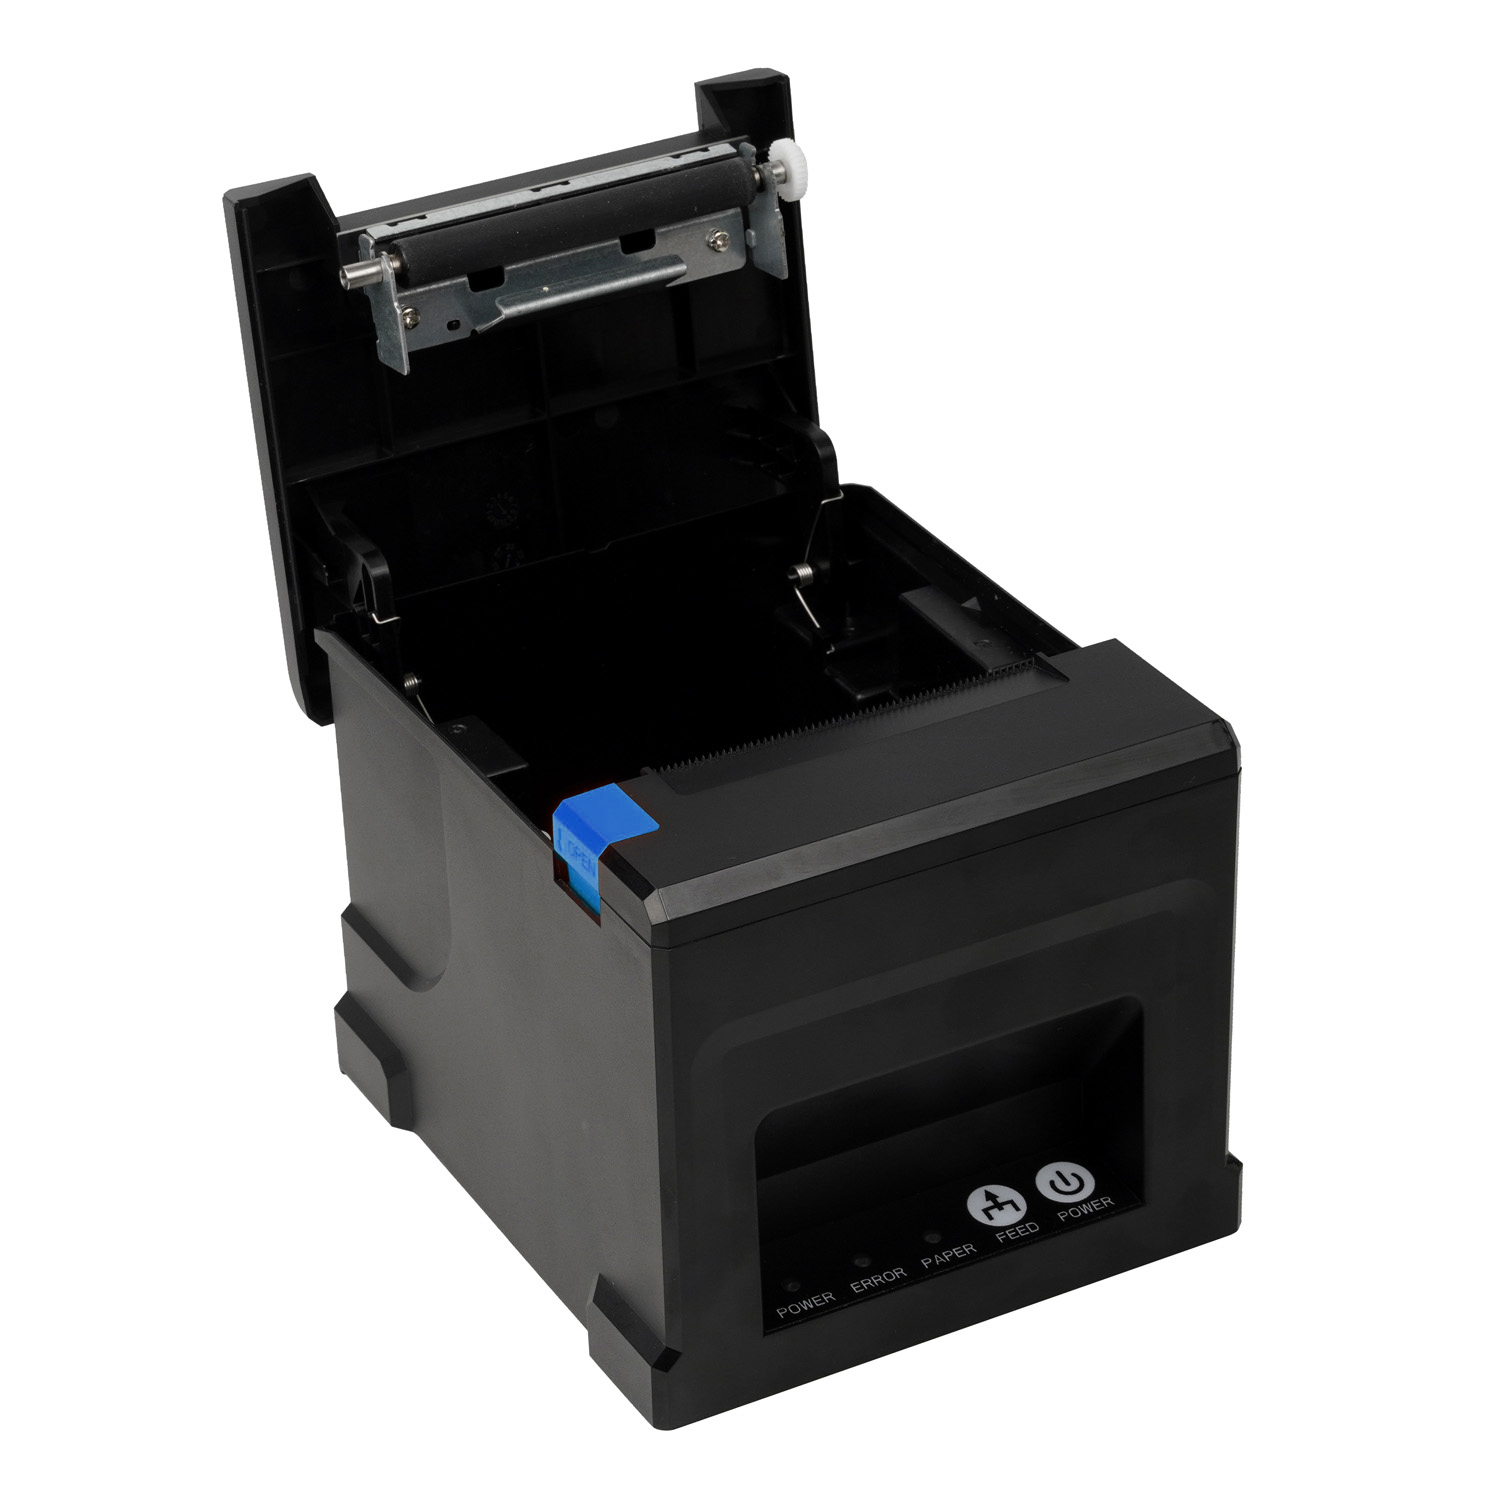 OCOM High Speed Thermal Receipt Printer OPOS Printer Auto Cutting USB Thermal POS Receipt Printer